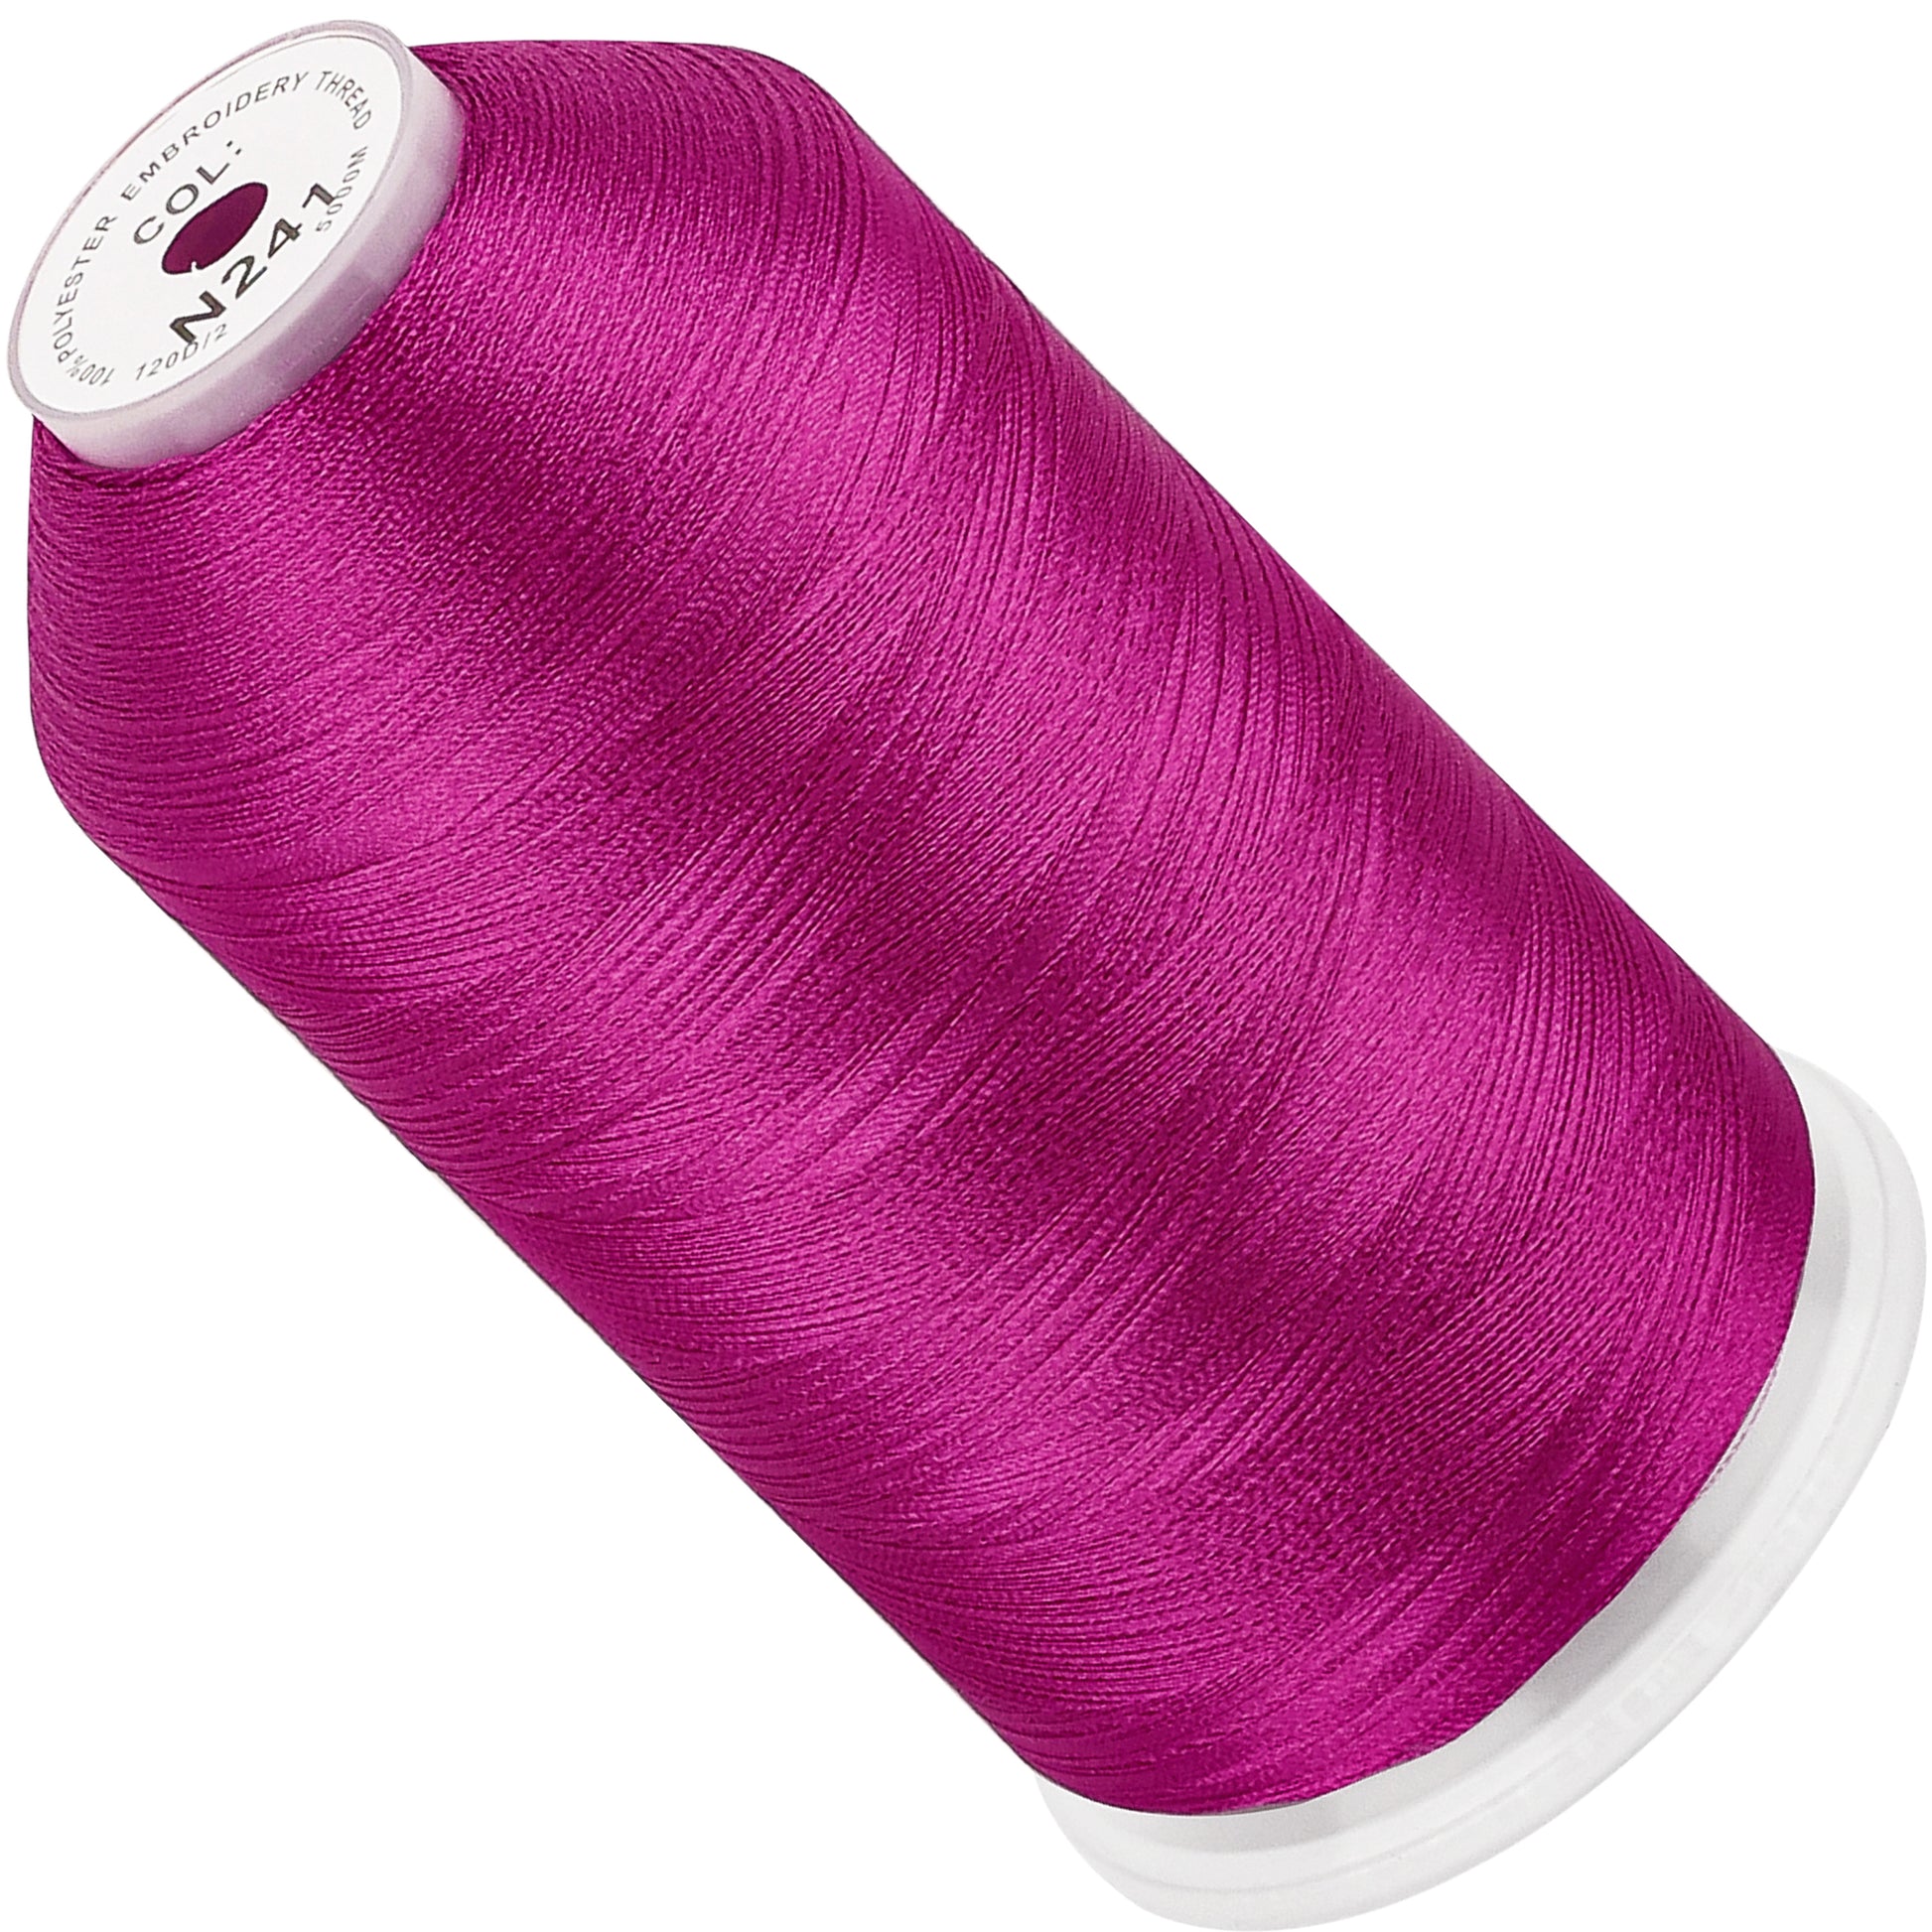 Bassoon Pink Thread 100% Nylon 300yds Spool